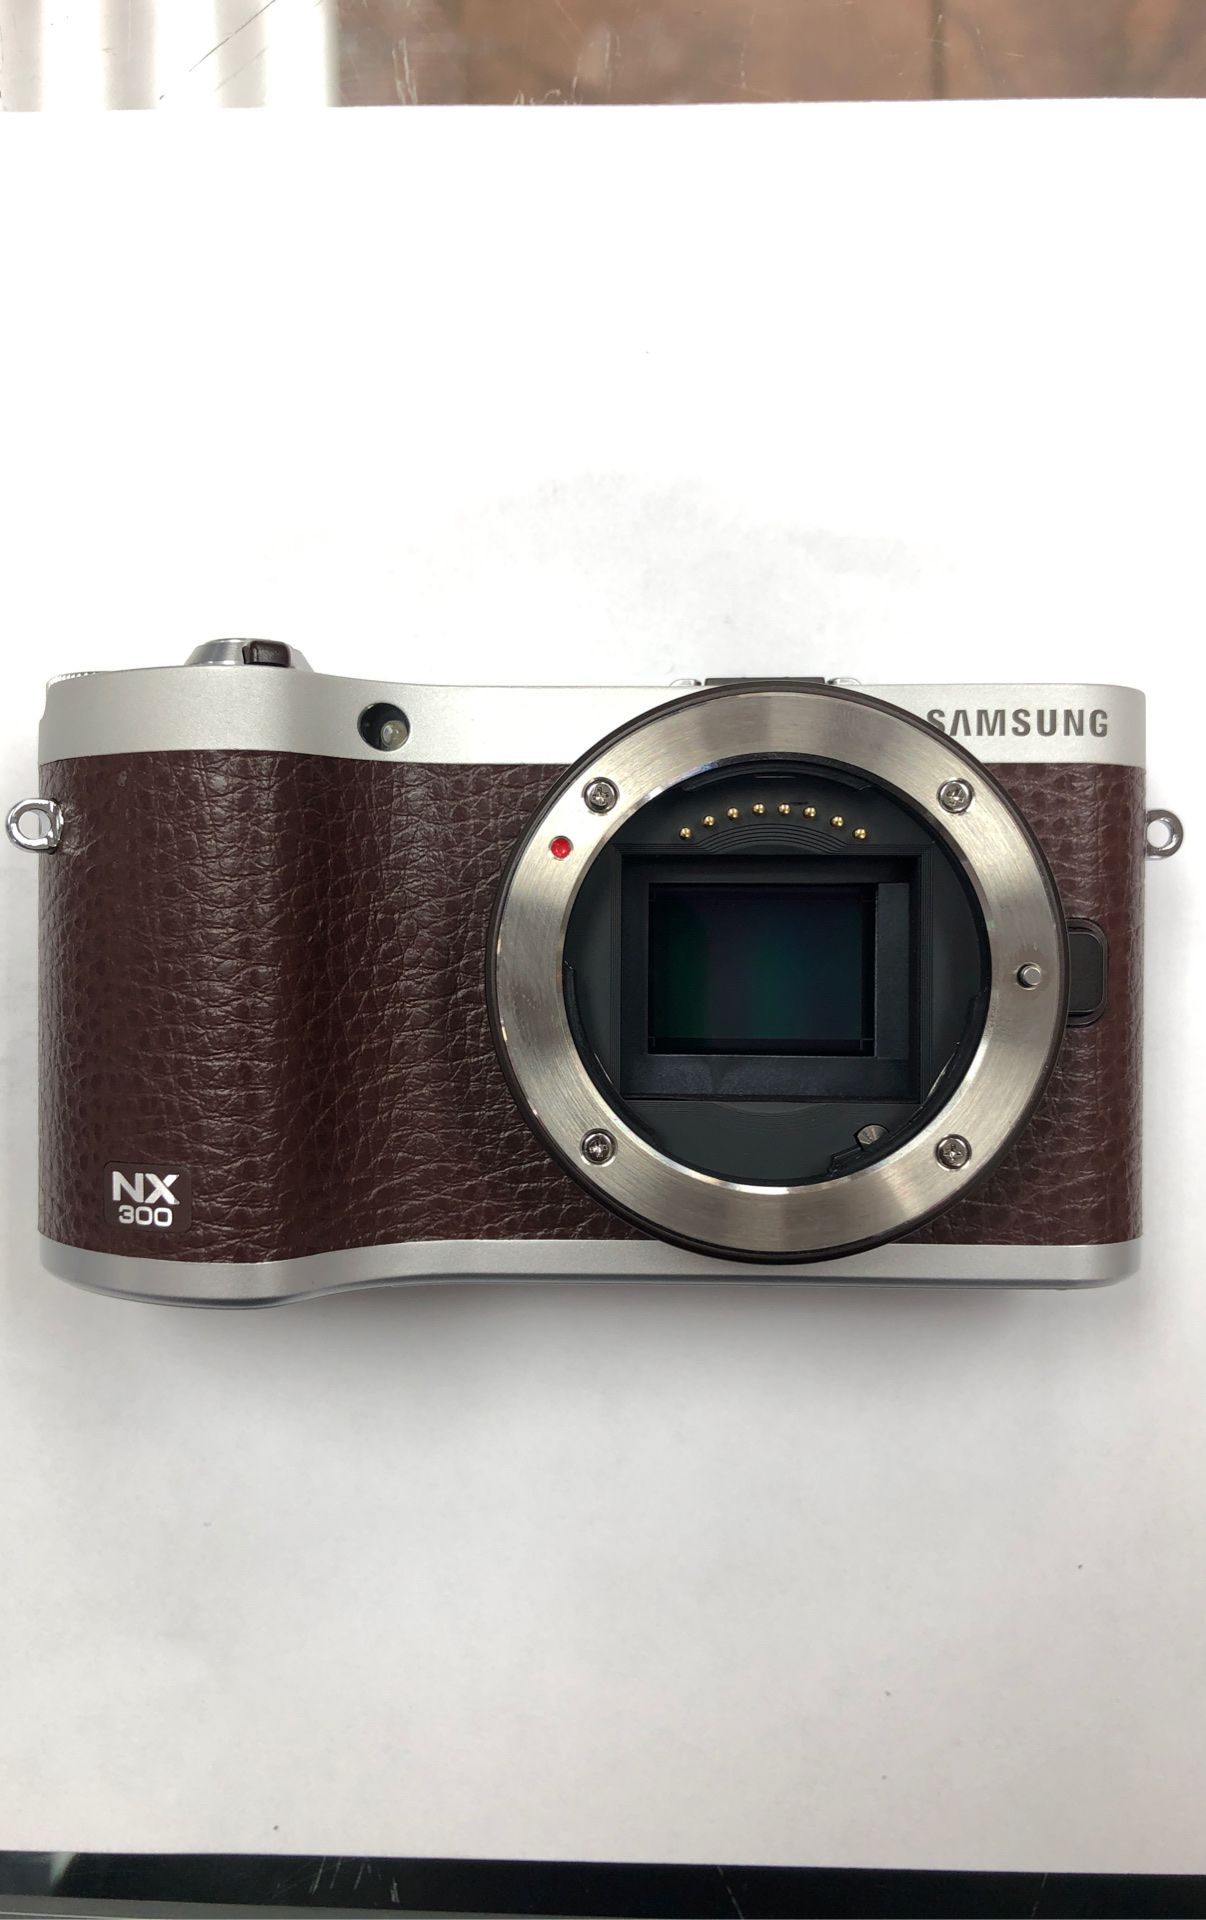 Samsung NX 300 - Digital Camera - Lens included